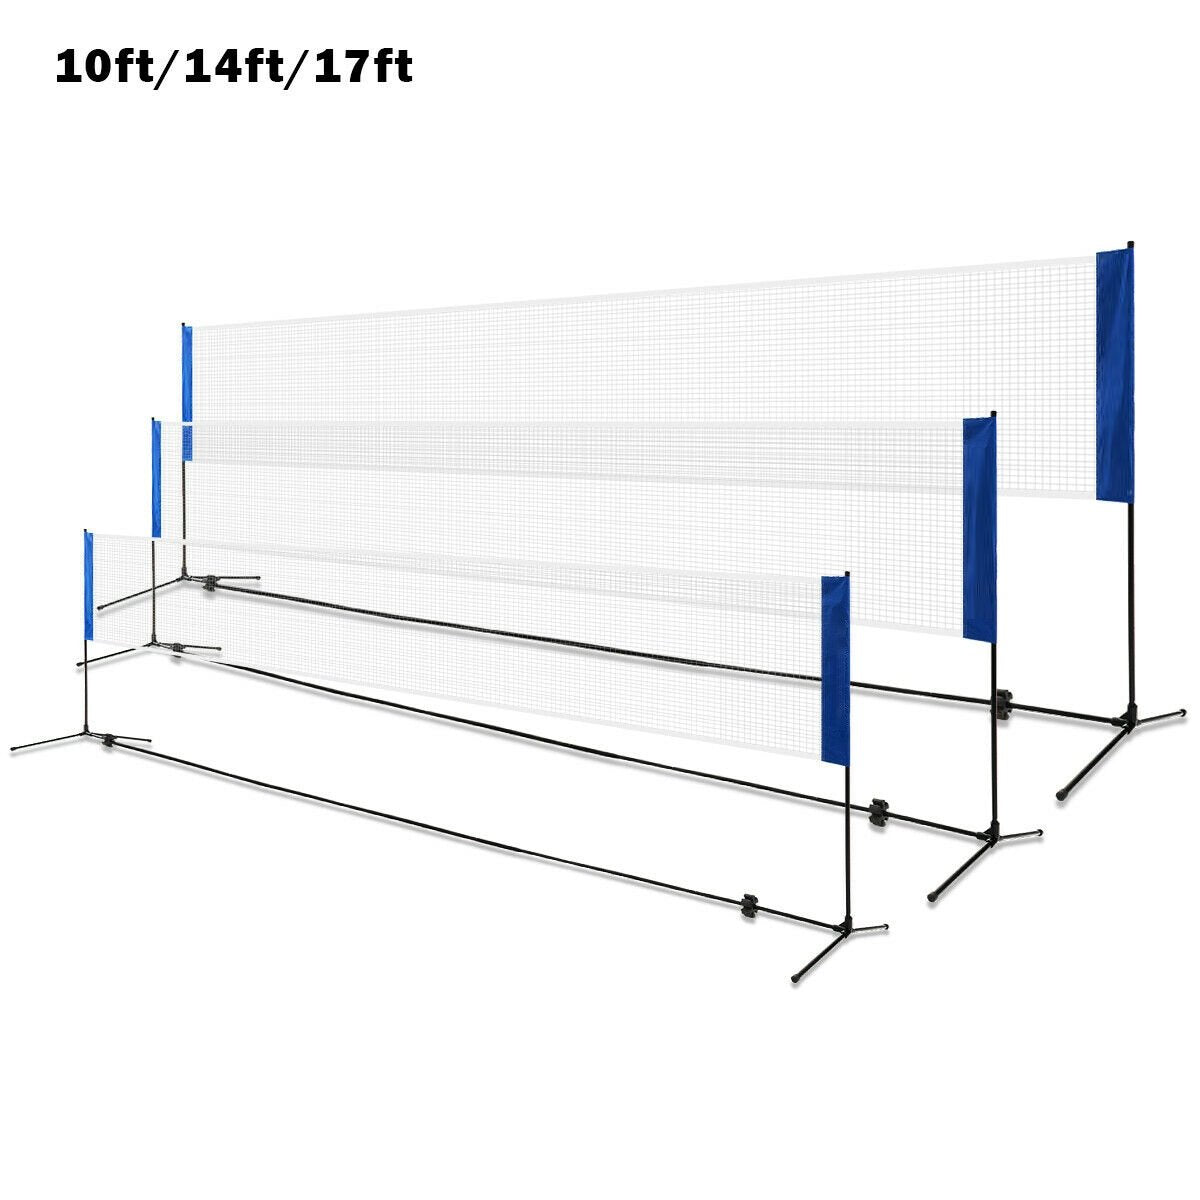 Portable 10 x 5 Inch Badminton Beach Tennis Training Net, Blue at Gallery Canada